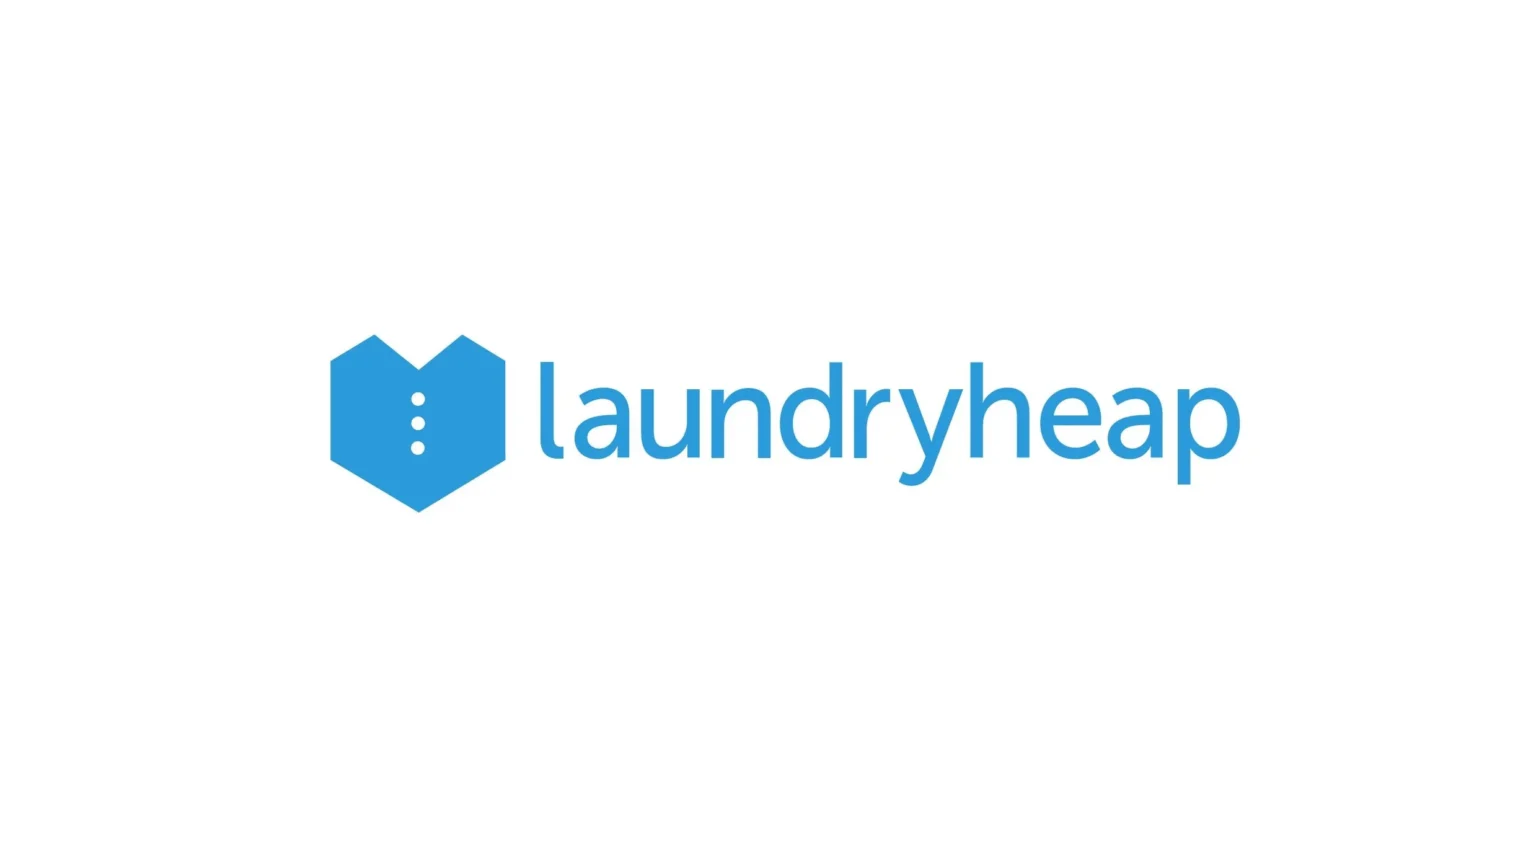 laundryheap referral